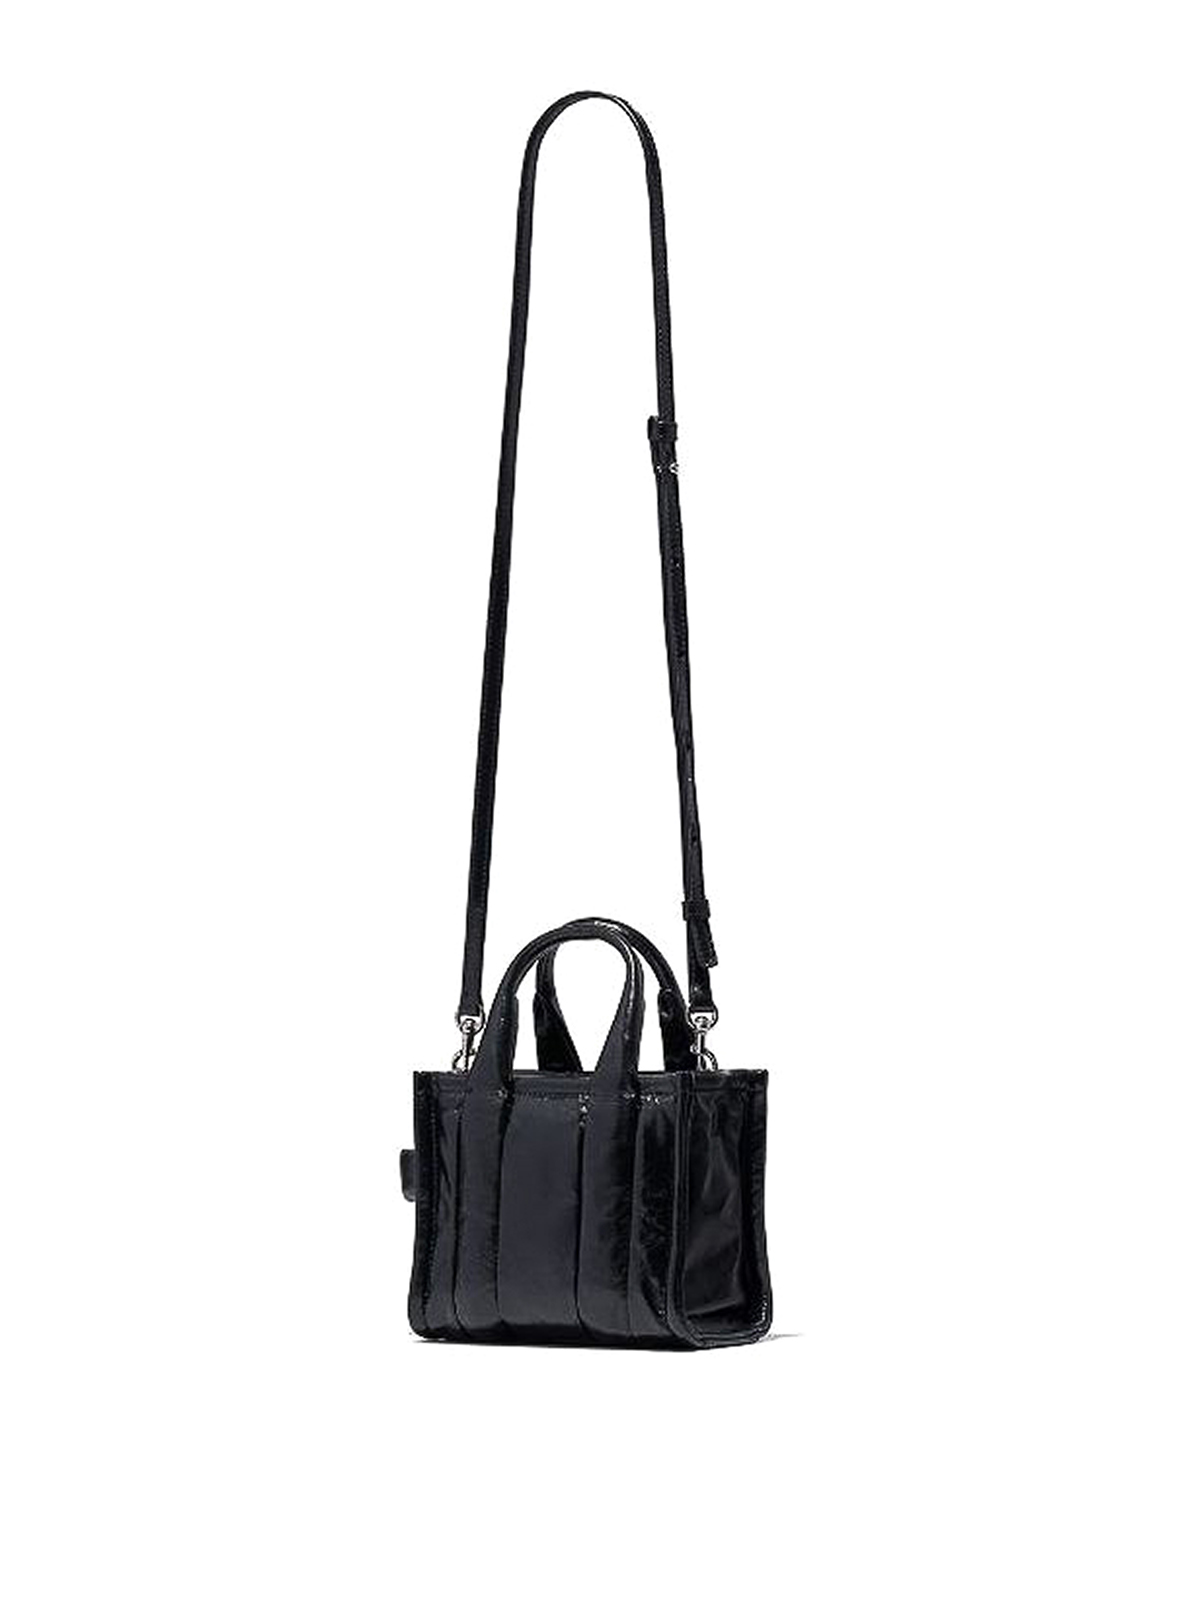 Marc Jacobs Black Mini Crinkle Leather Tote Bag